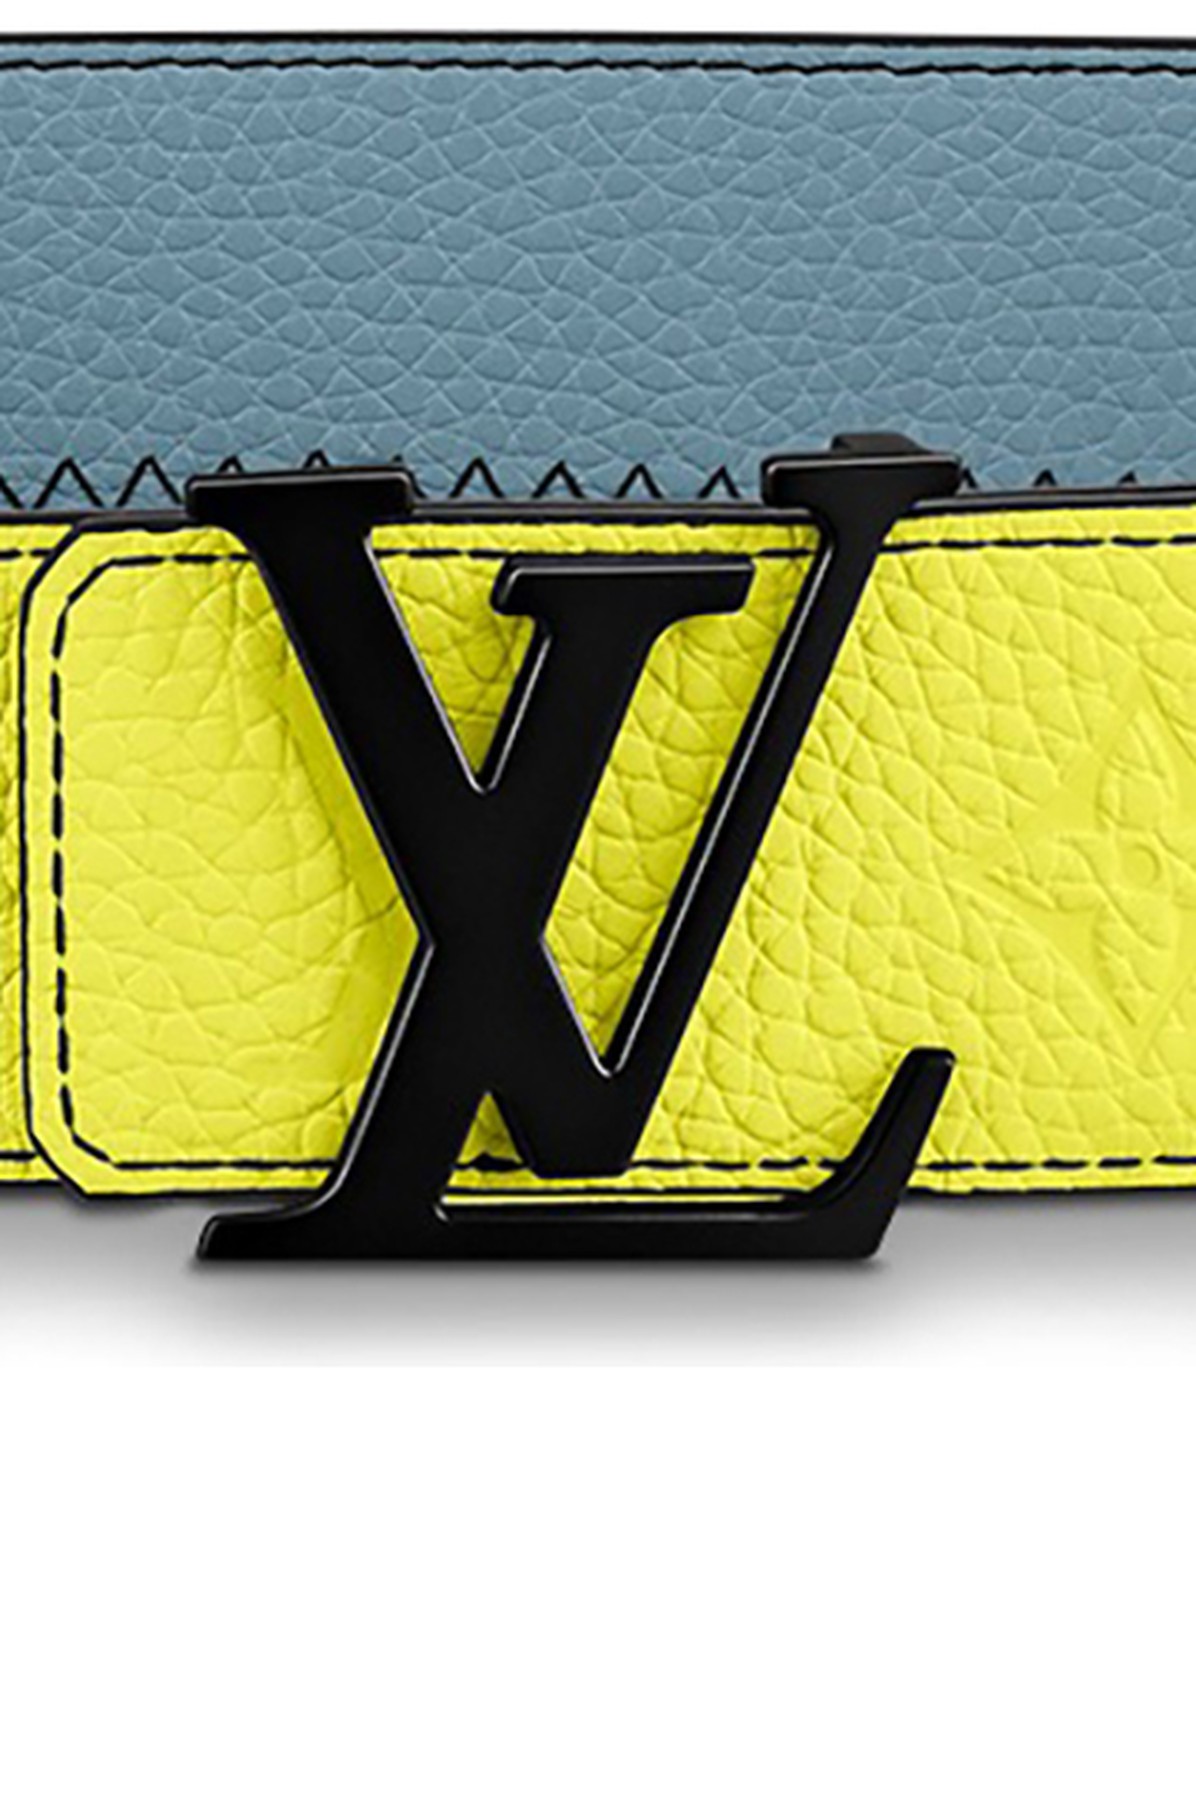 Louis Vuitton LV initials 40mm Reversible Belt Neon Yellow